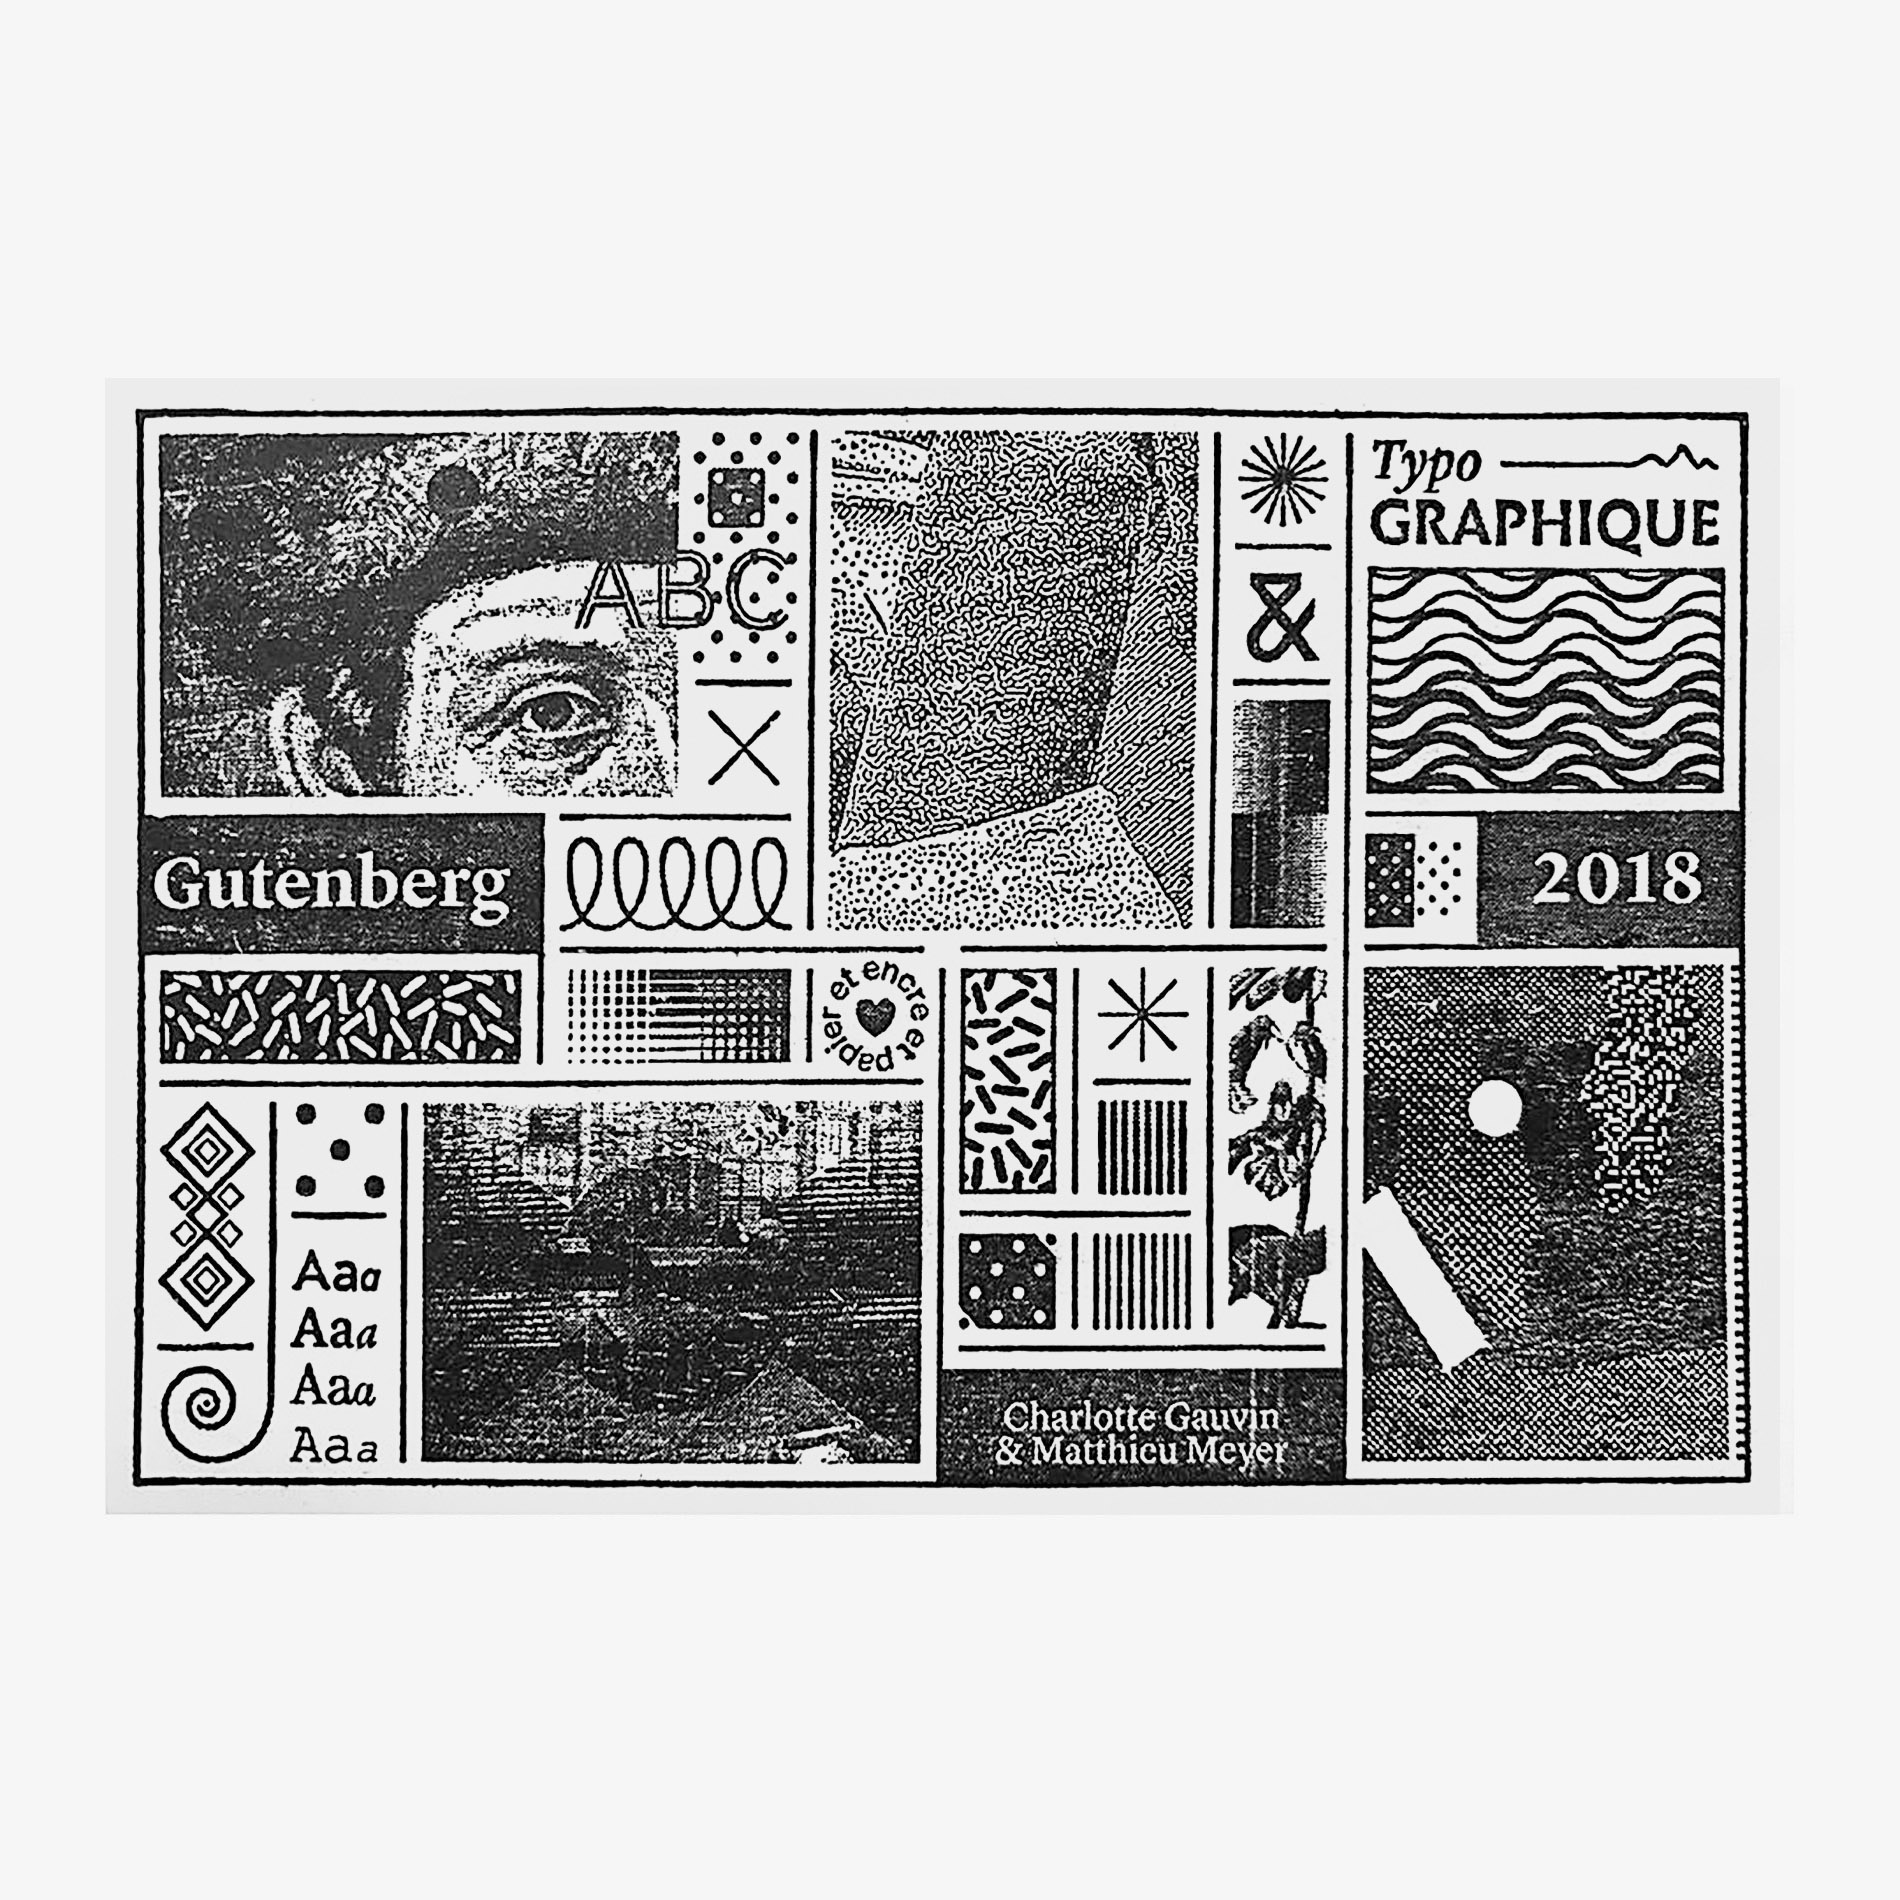 Composition Gutenberg 2018